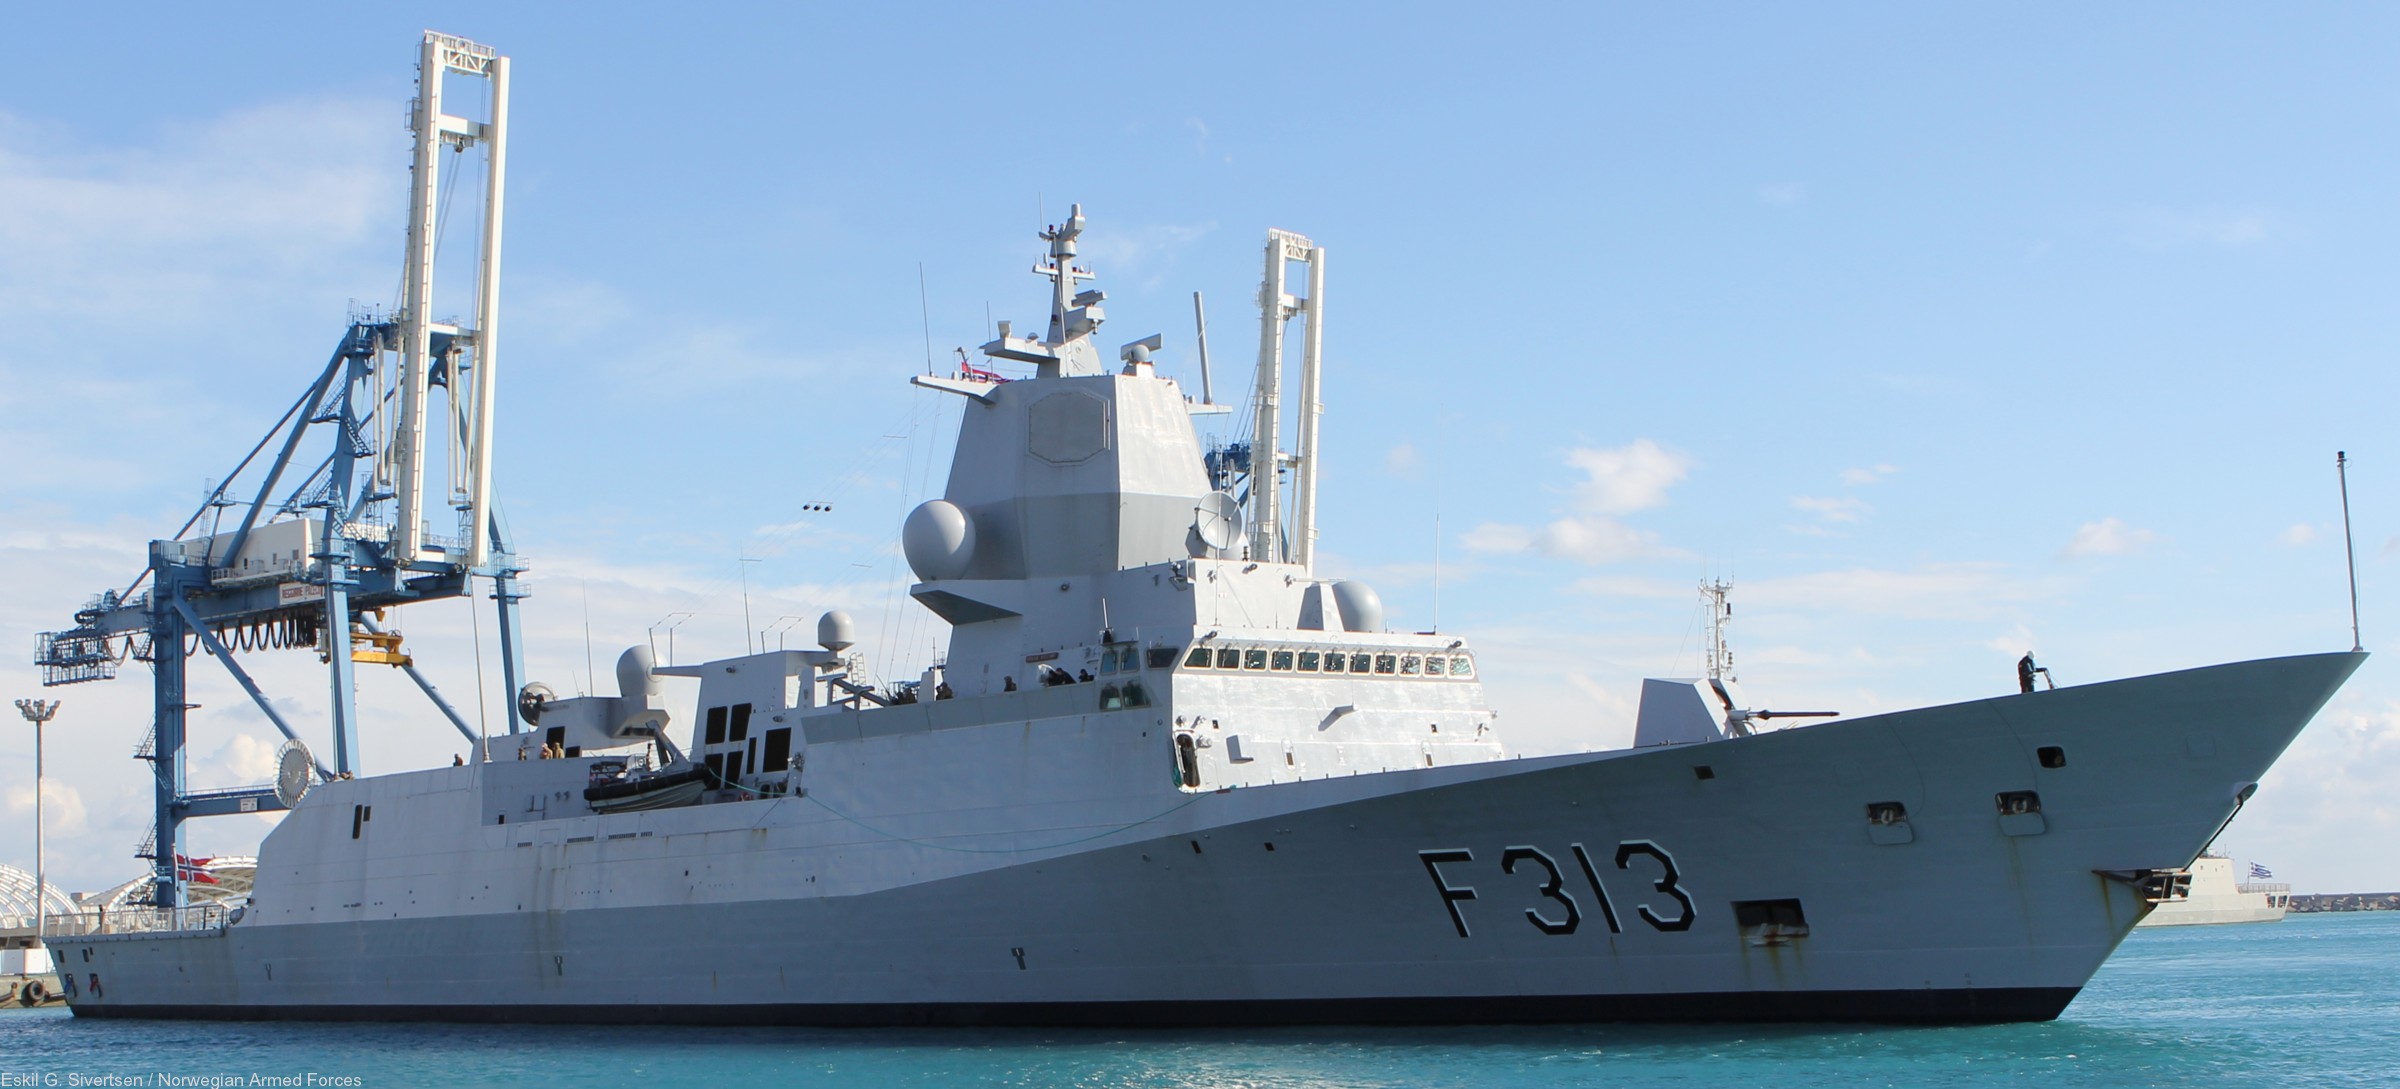 f-313 helge ingstad hnoms knm nansen class frigate royal norwegian navy 38 limmasol cyprus